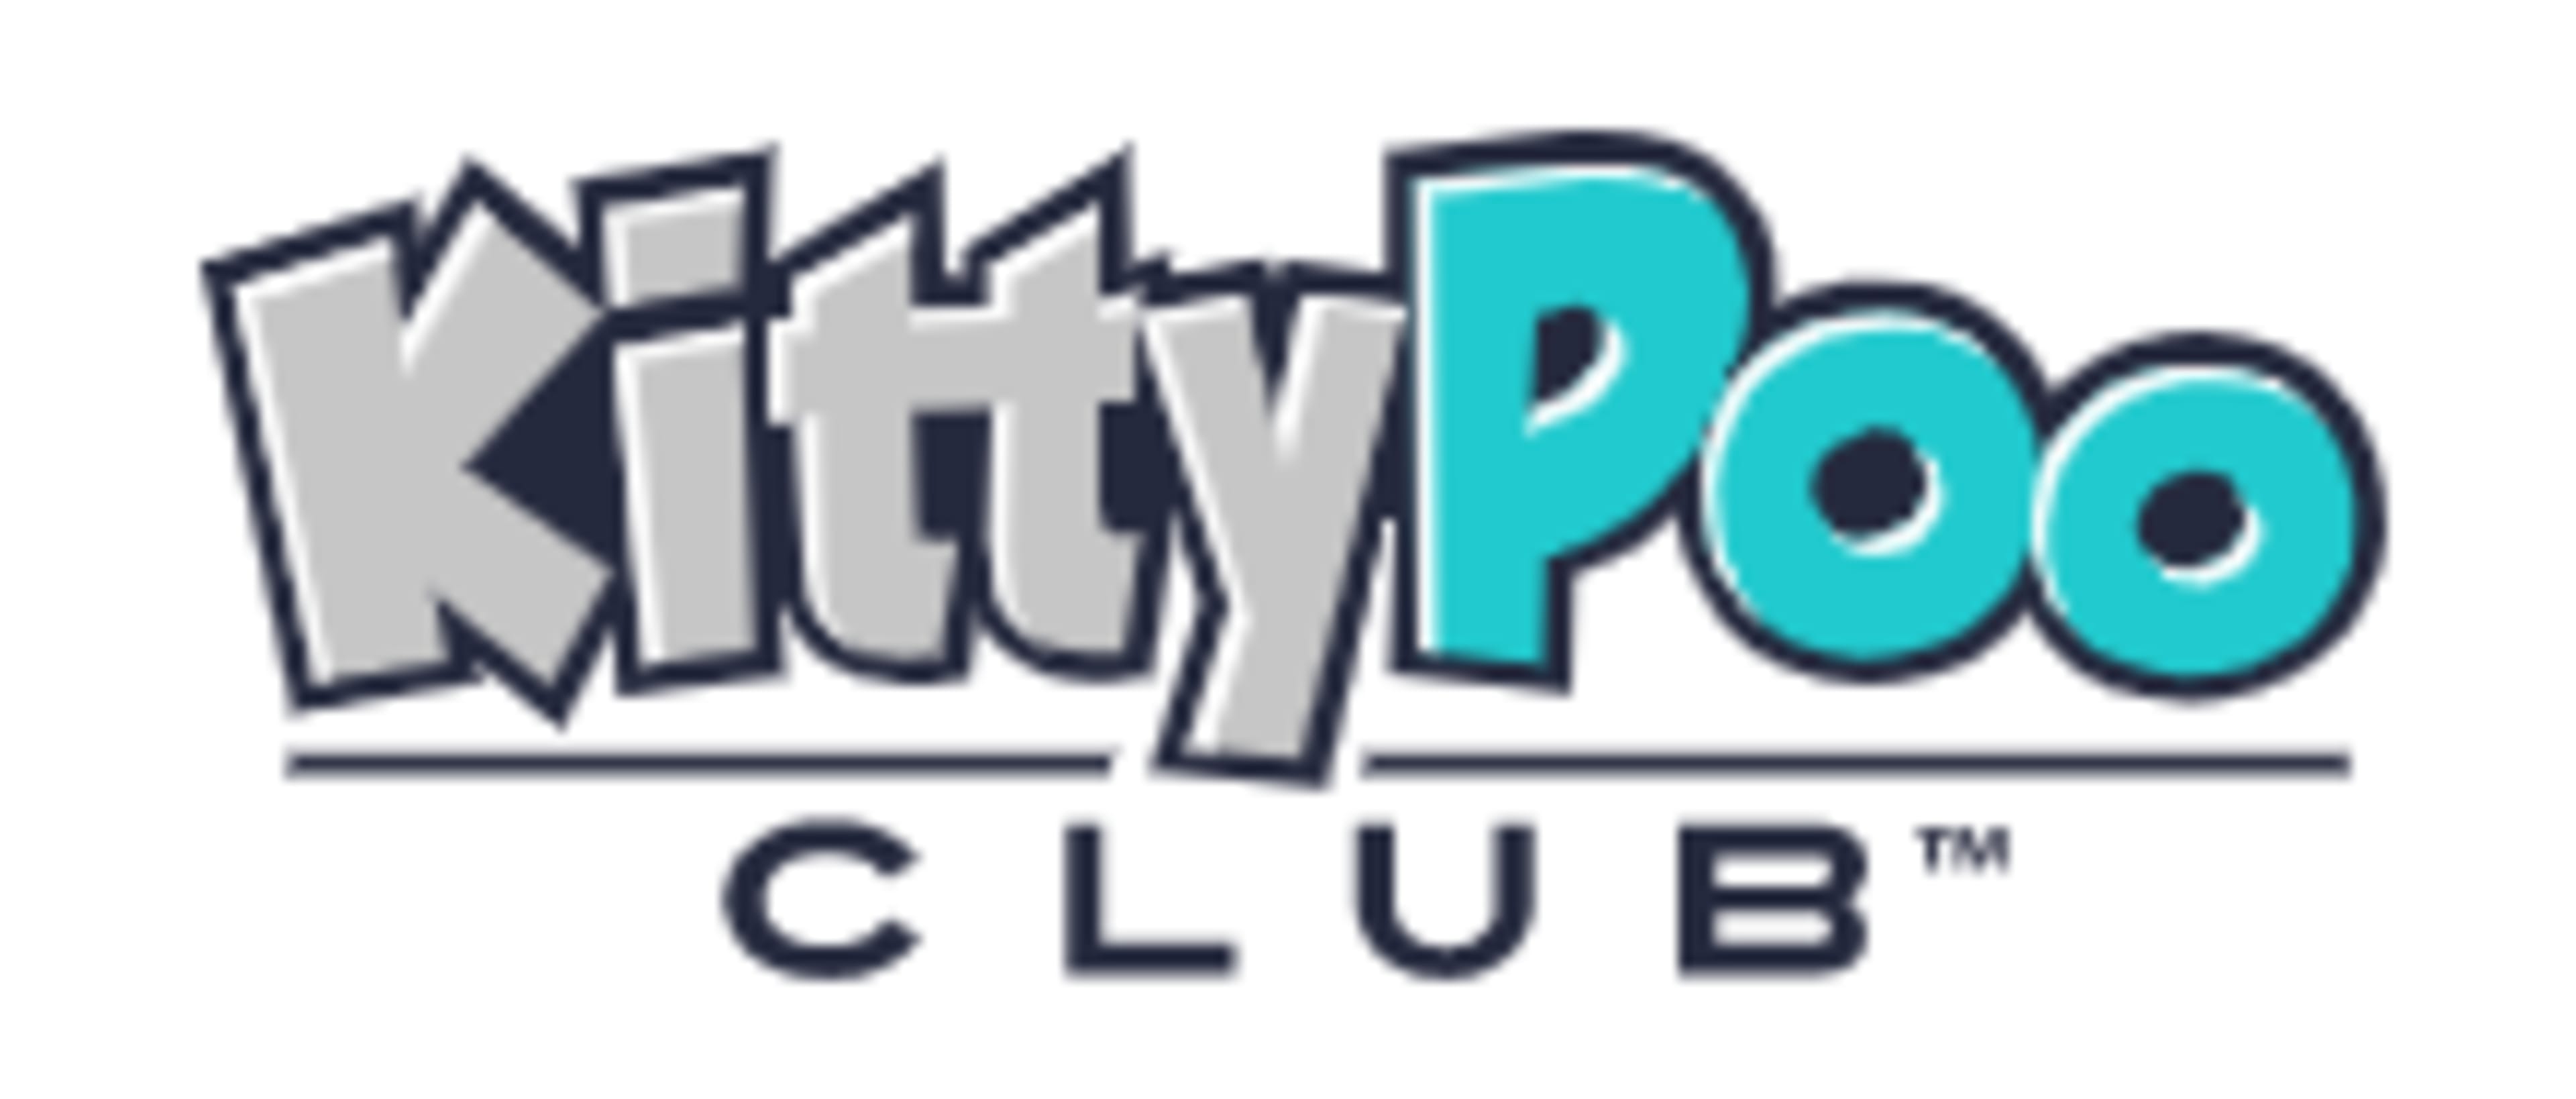 Kitty Poo ClubCode